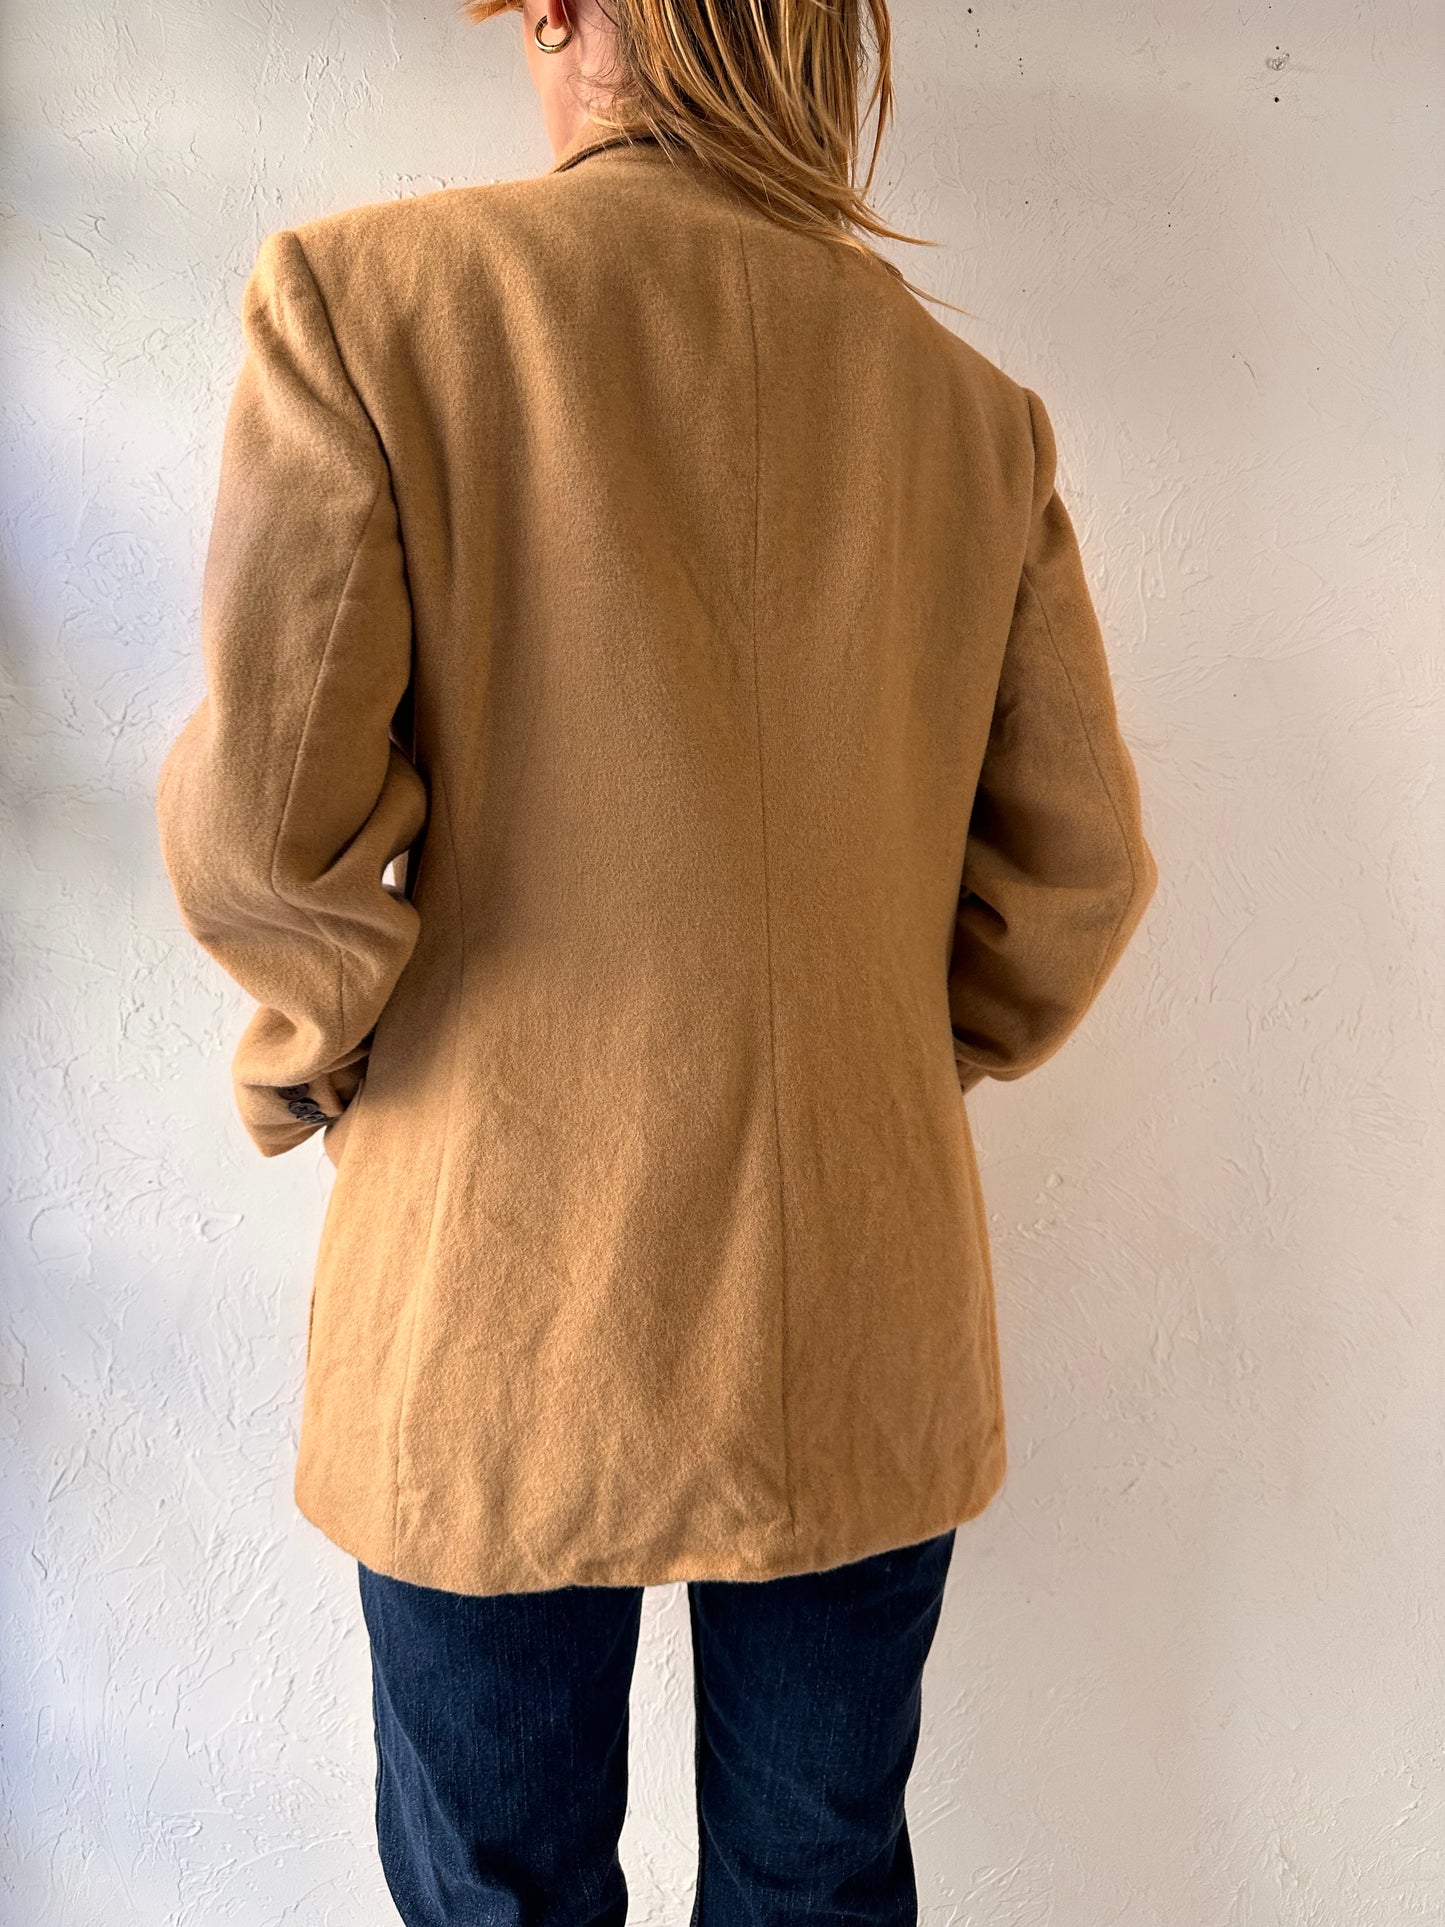 90s 'Ralph Lauren' Camel Hair Blazer Jacket / Large